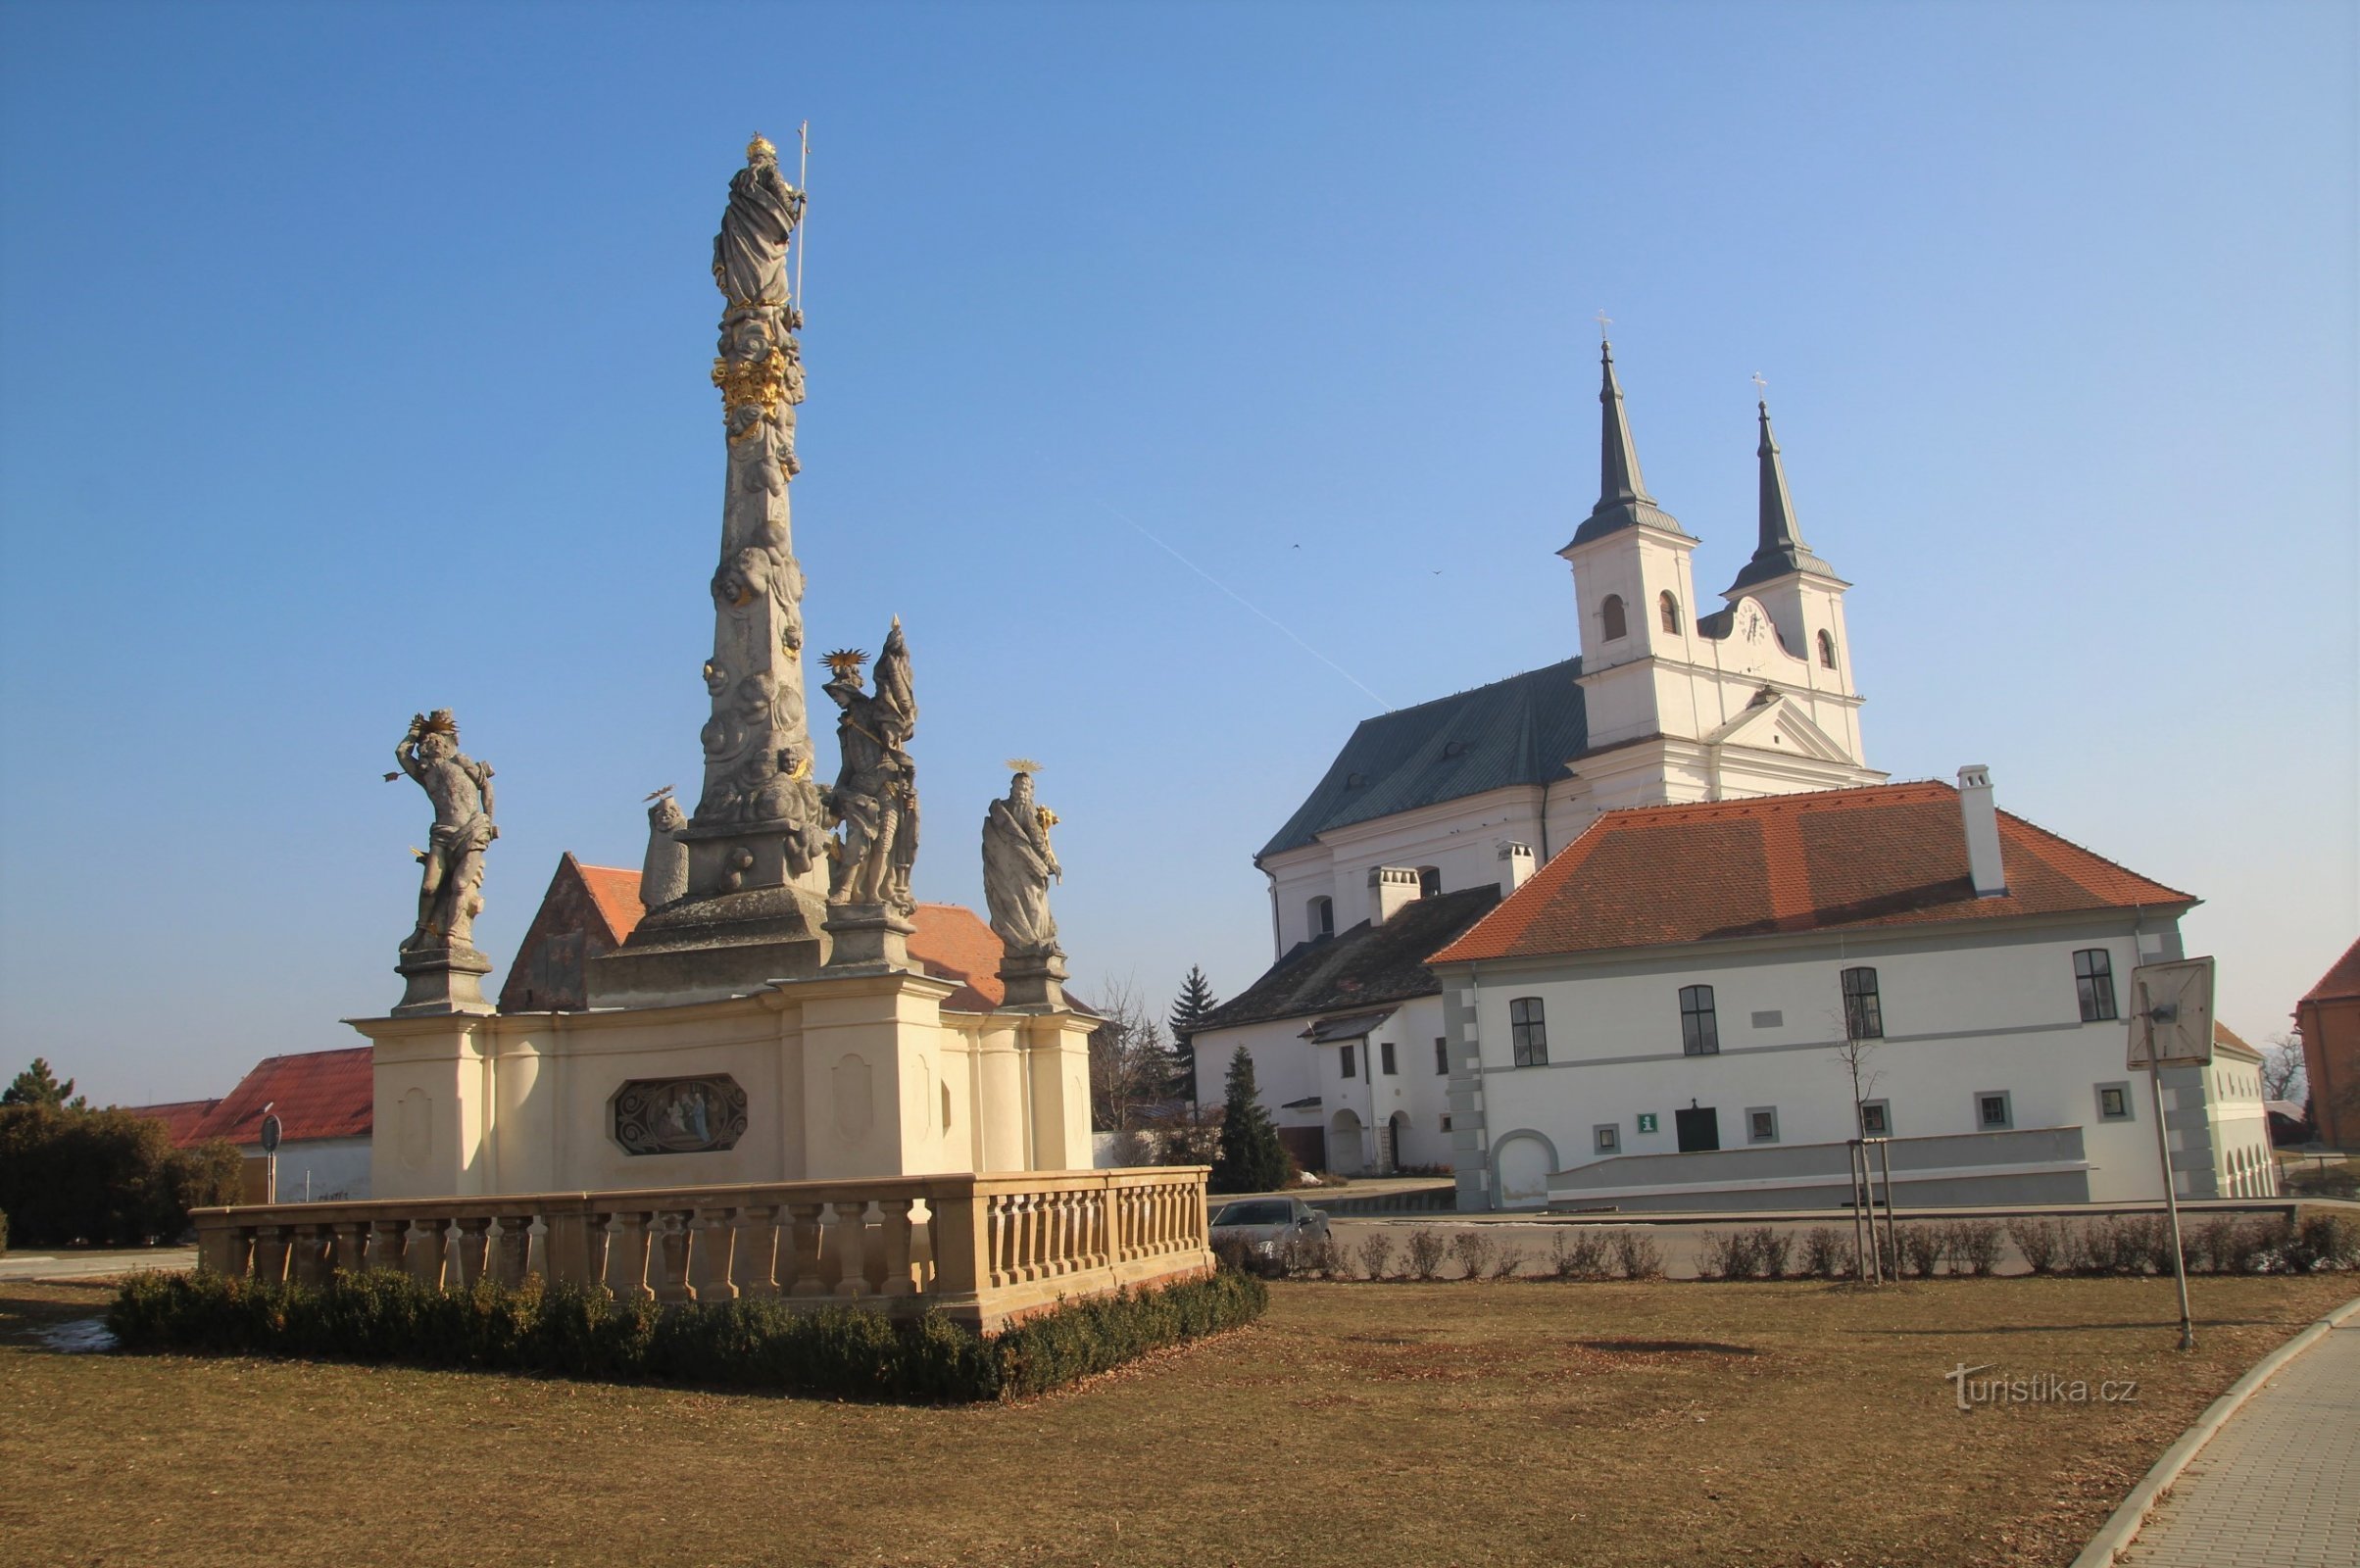 Drnholecké náměstí med Mariasøjlen, det gamle rådhus og Den Hellige Treenigheds Kirke